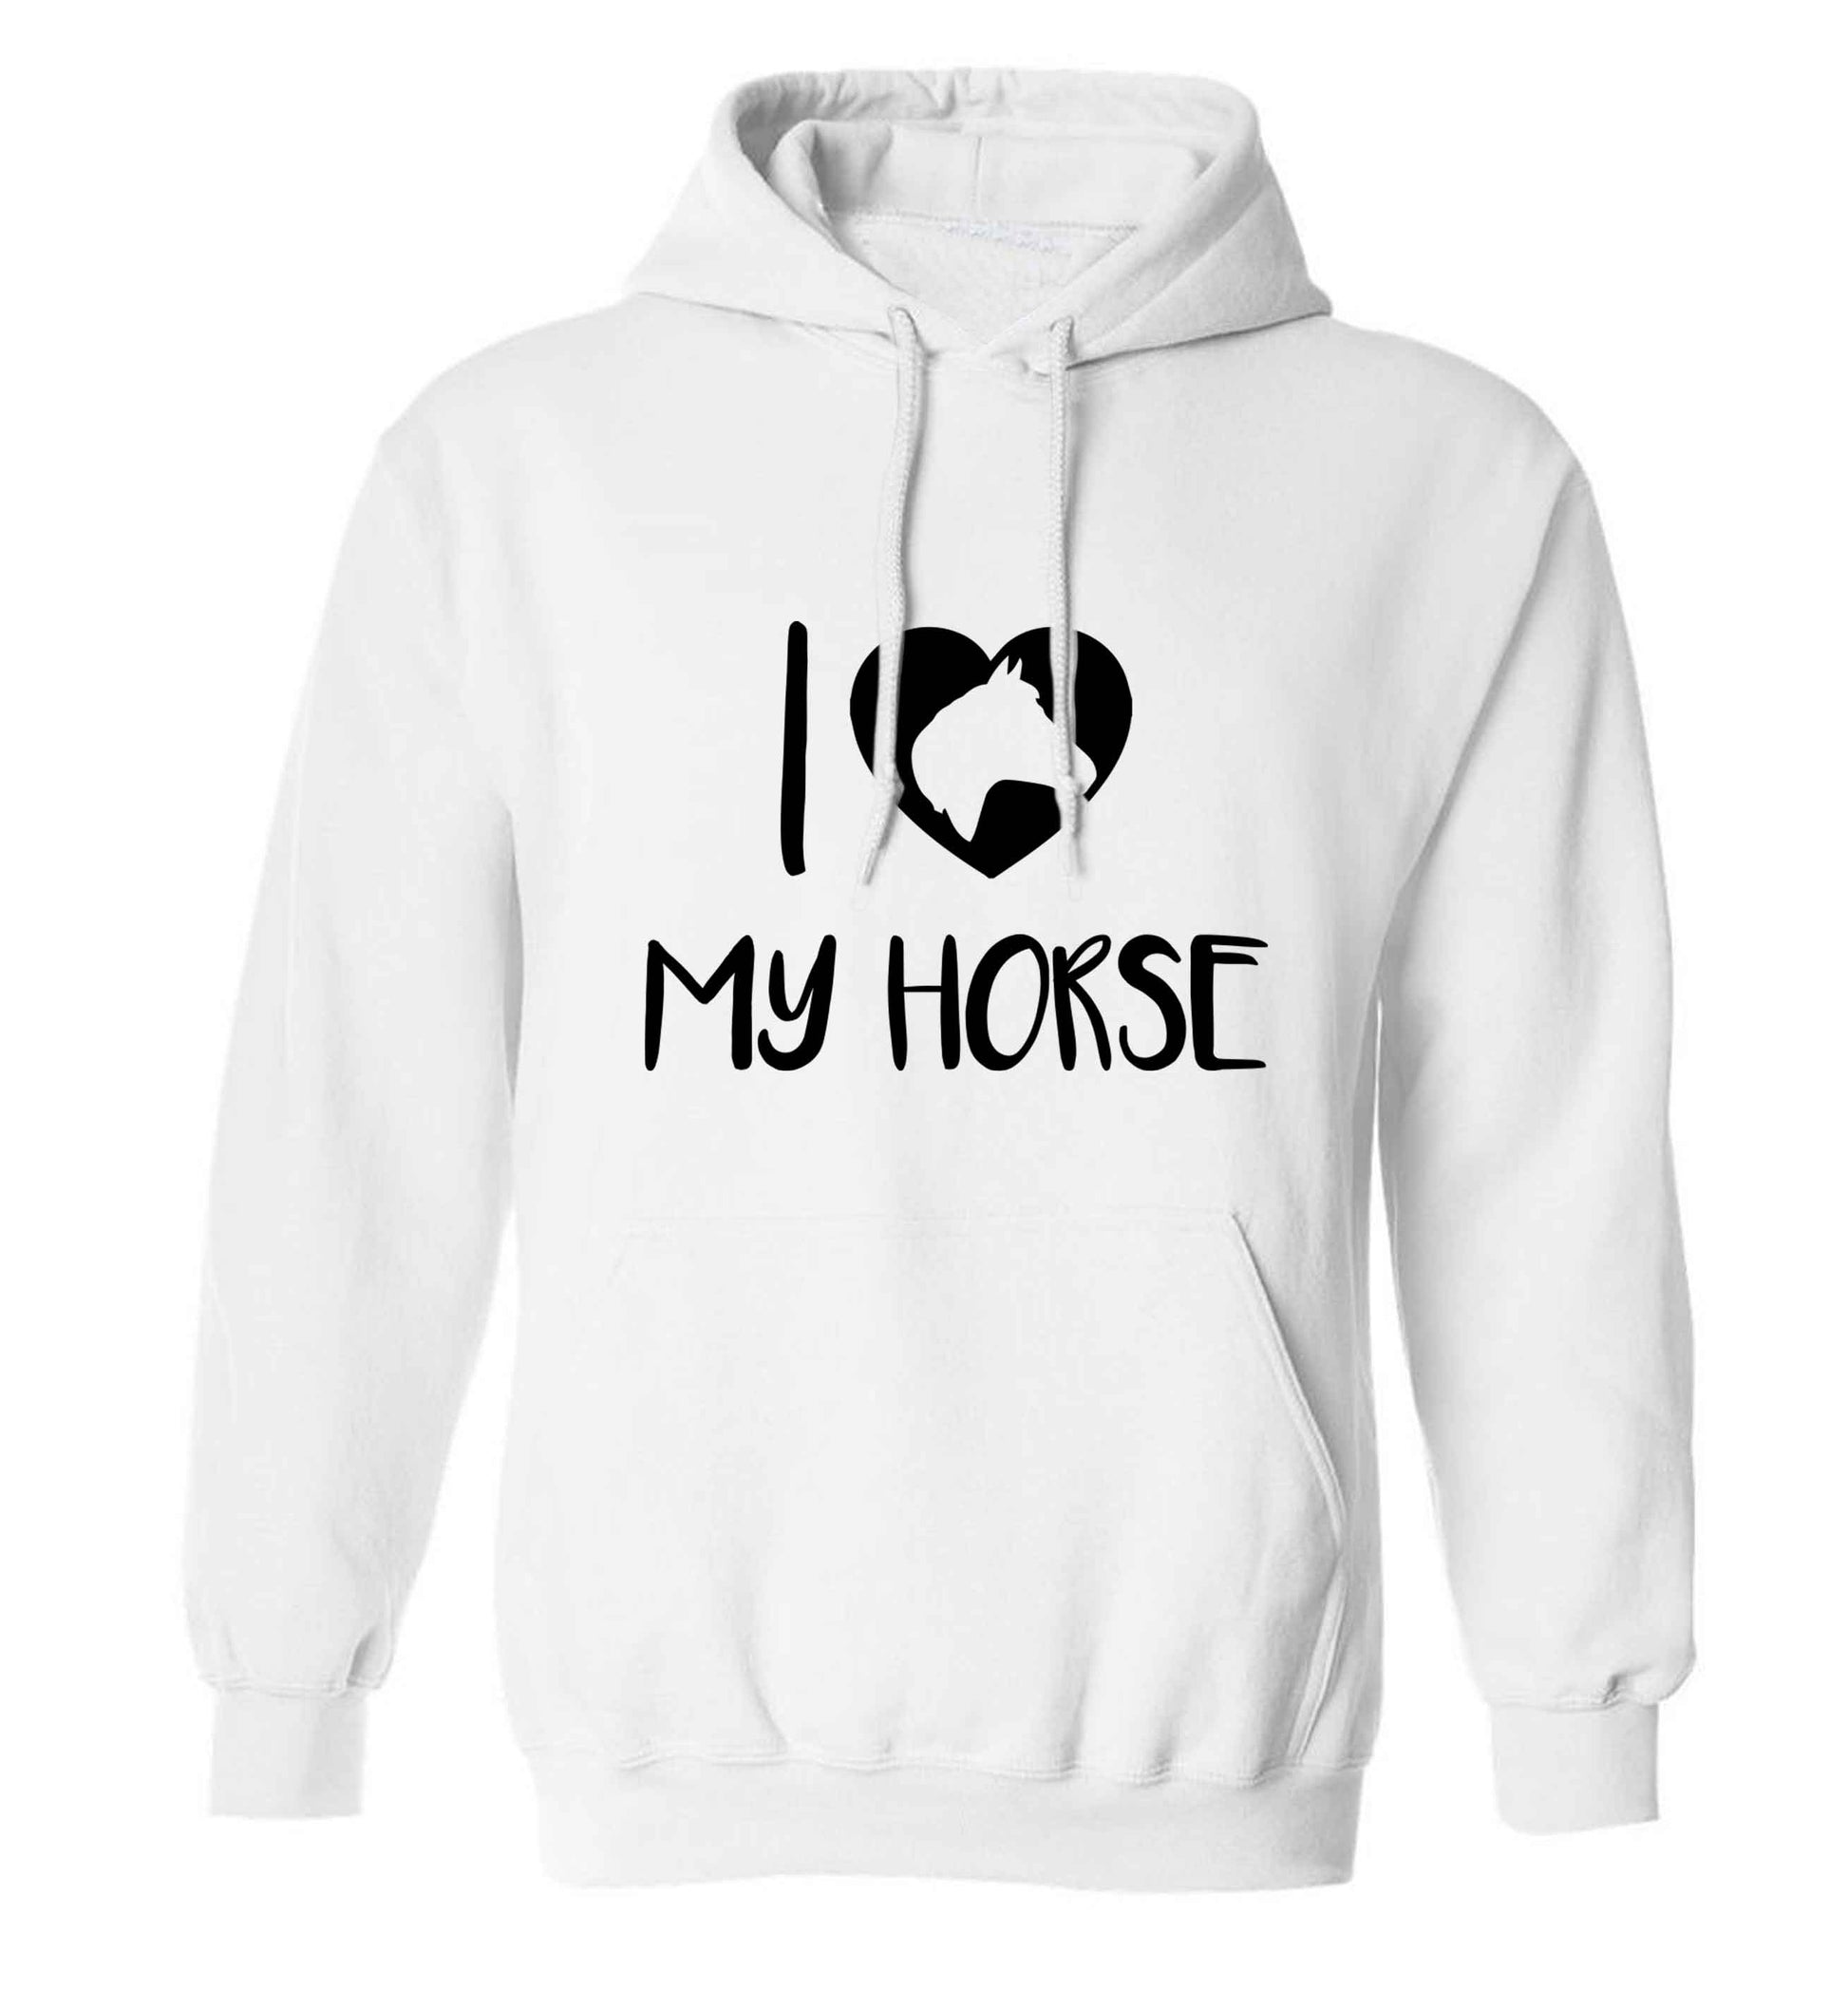 I love my horse adults unisex white hoodie 2XL